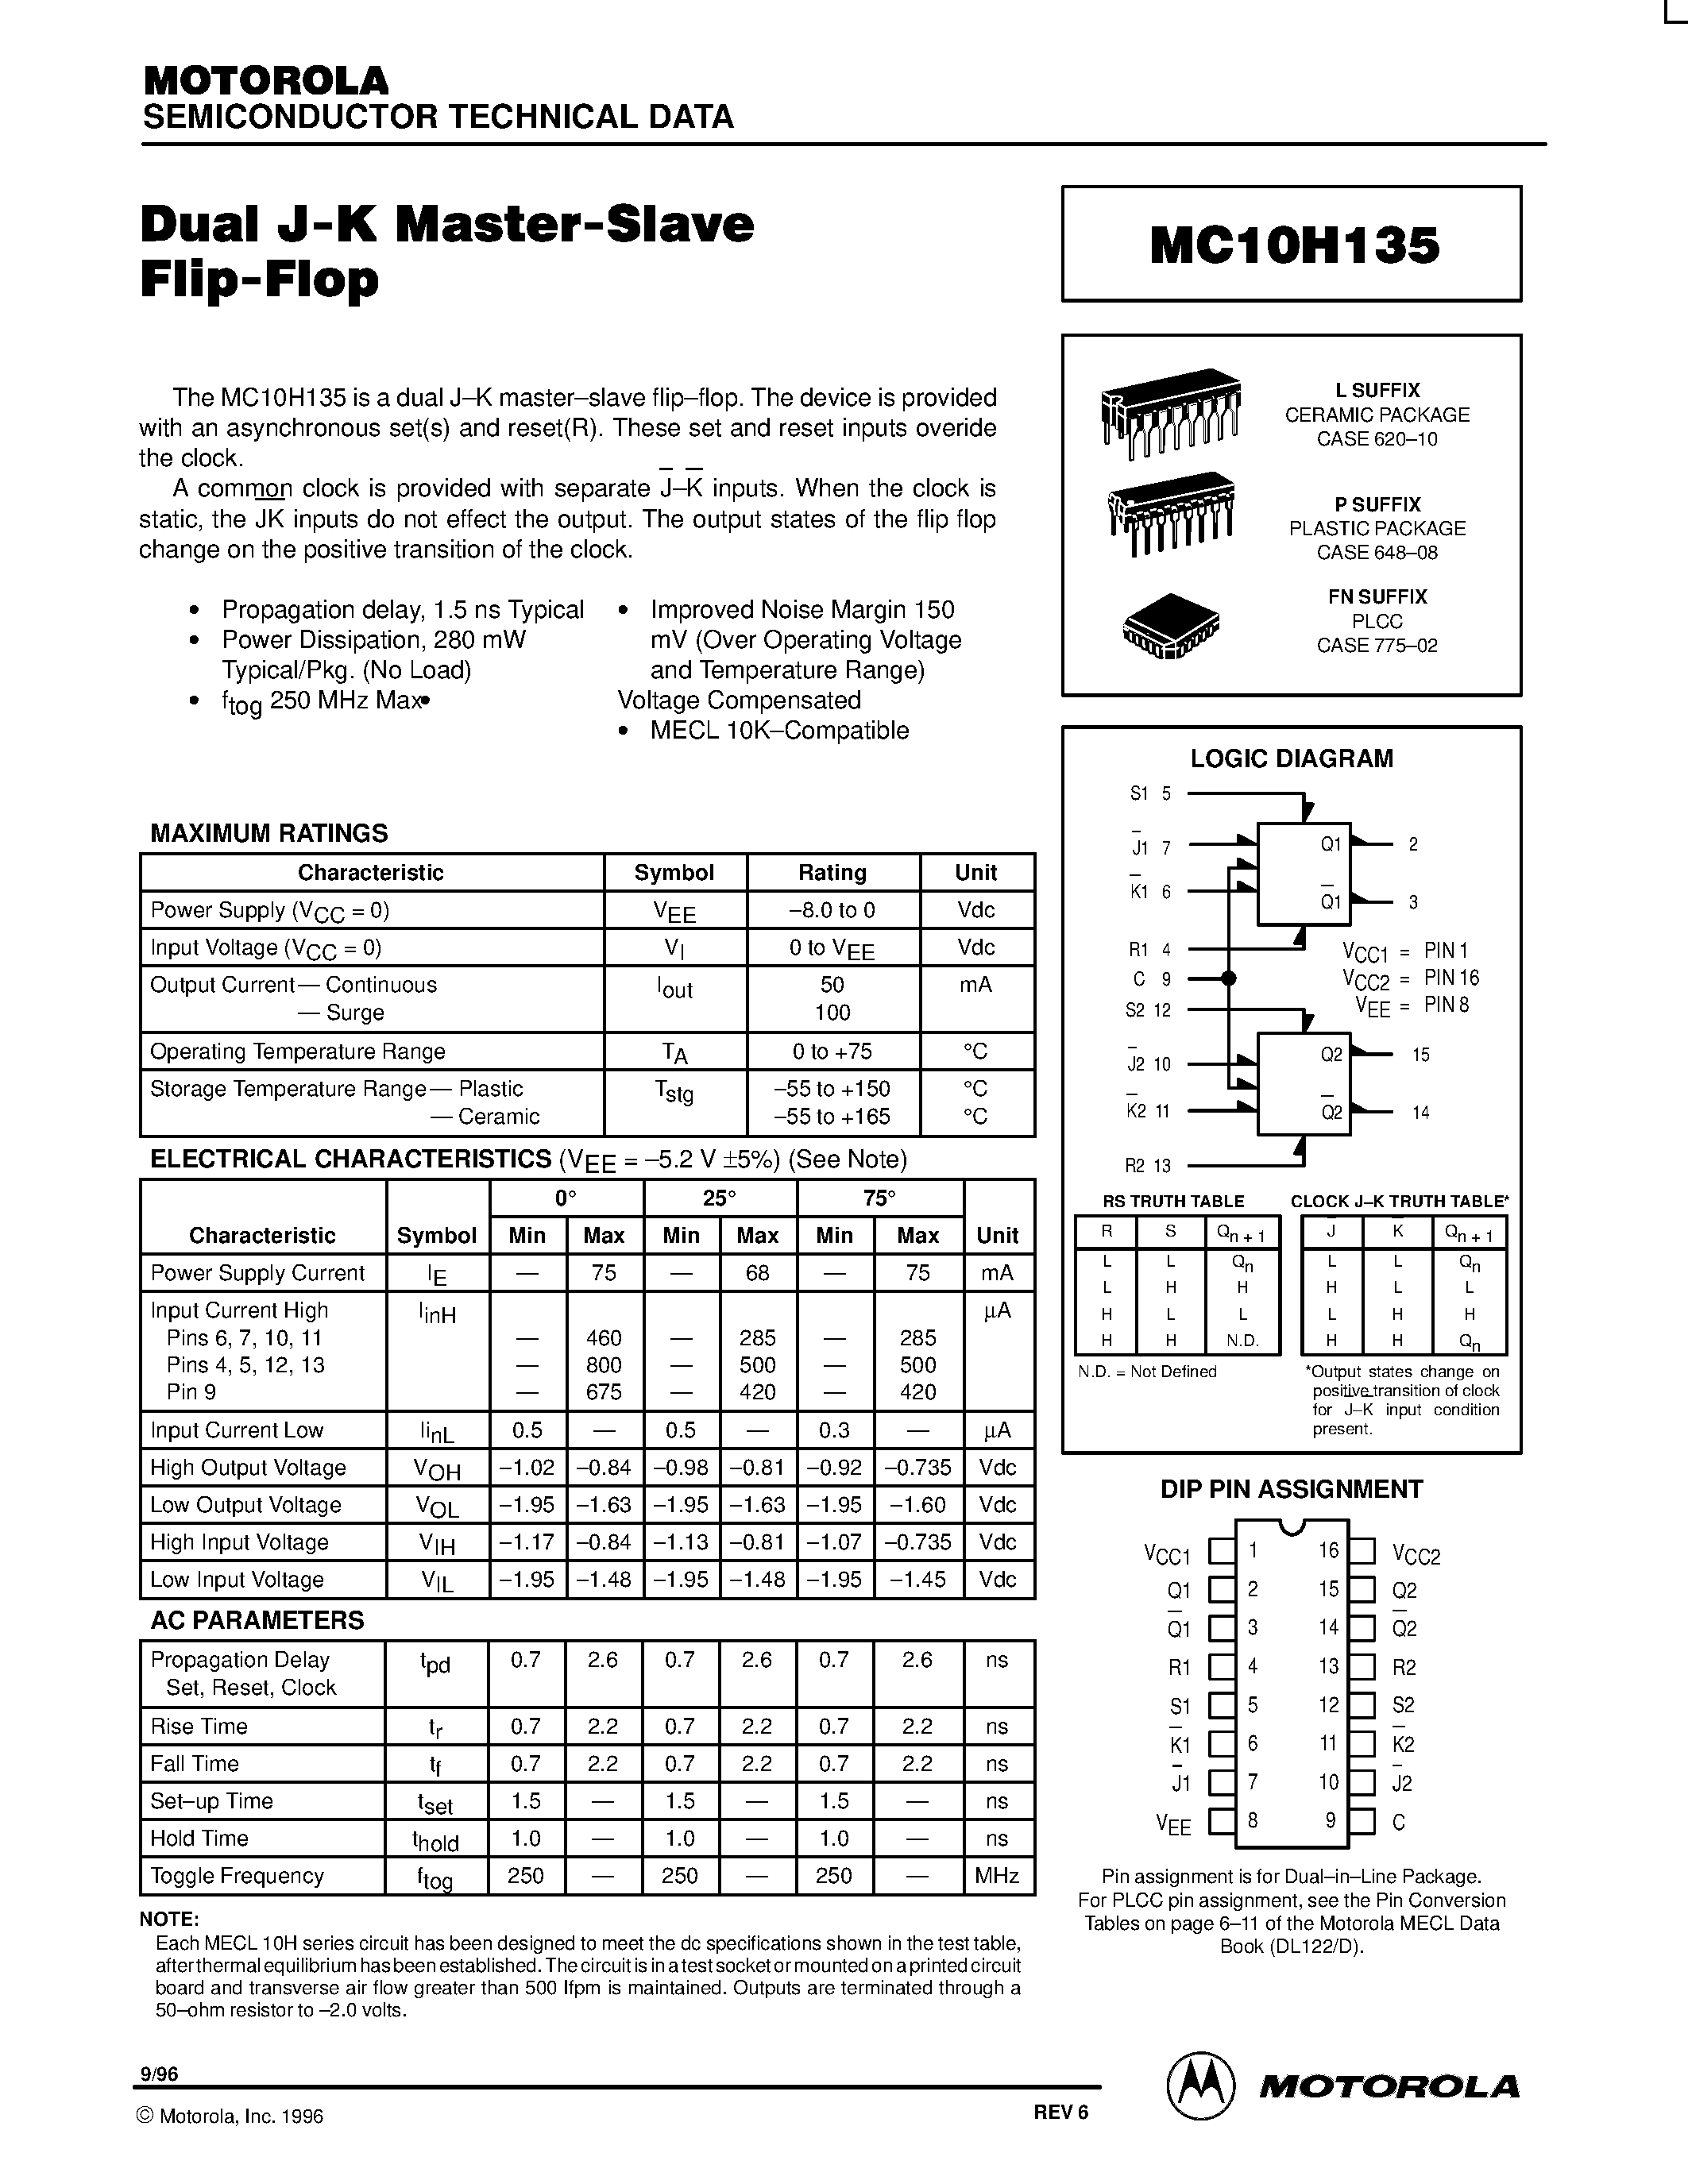 Datasheet MC10H135FN - Dual J-K Master-Slave Flip-Flop page 1